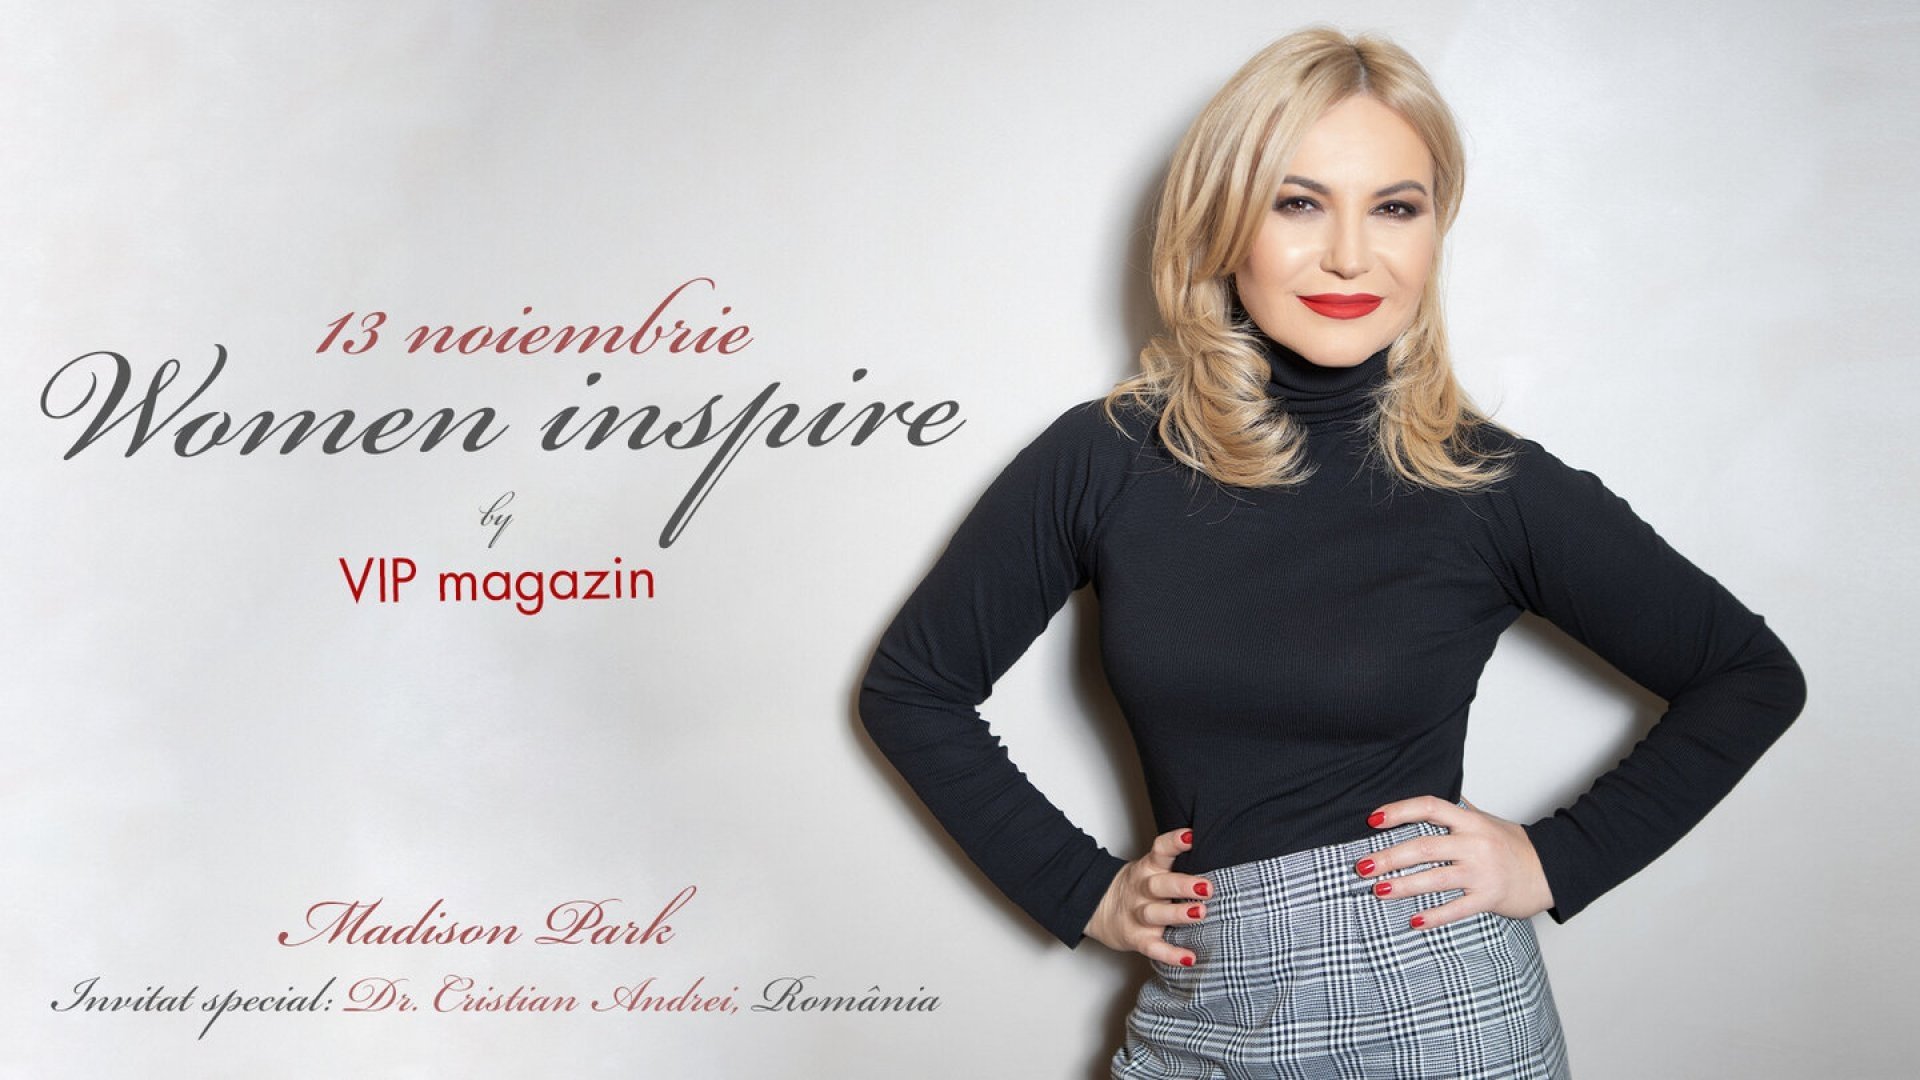 Women inspire by VIP Magazin